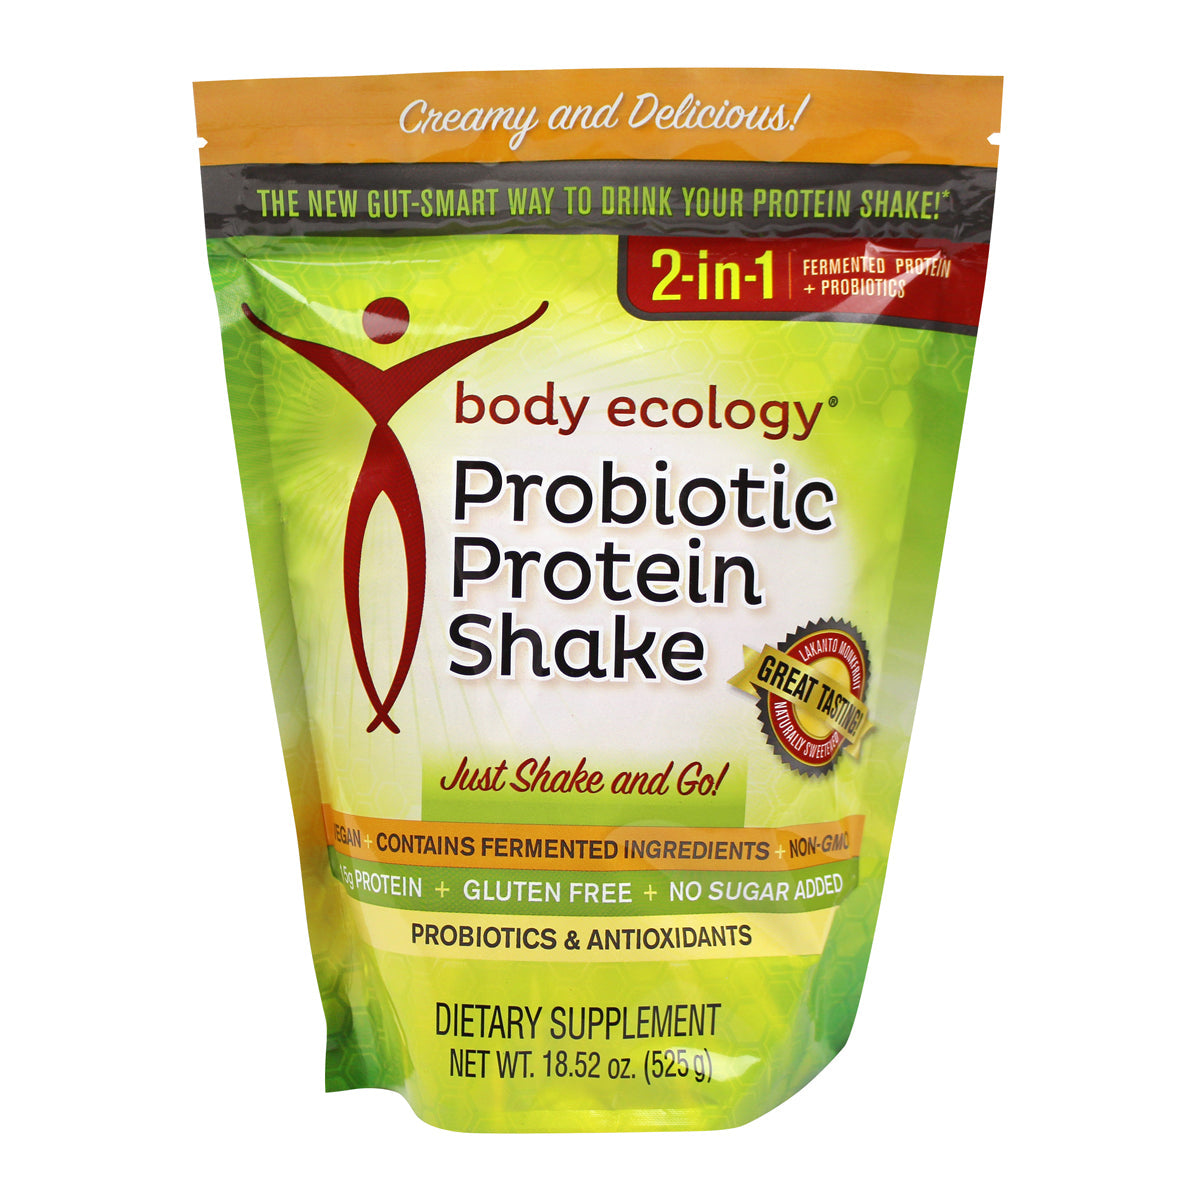 Body Ecology probiotic protein shake fermented protein and probiotics gluten free antioxidants best seller best tasting naturally sweetened gut friendly gut healing autoimmune autism adhd add